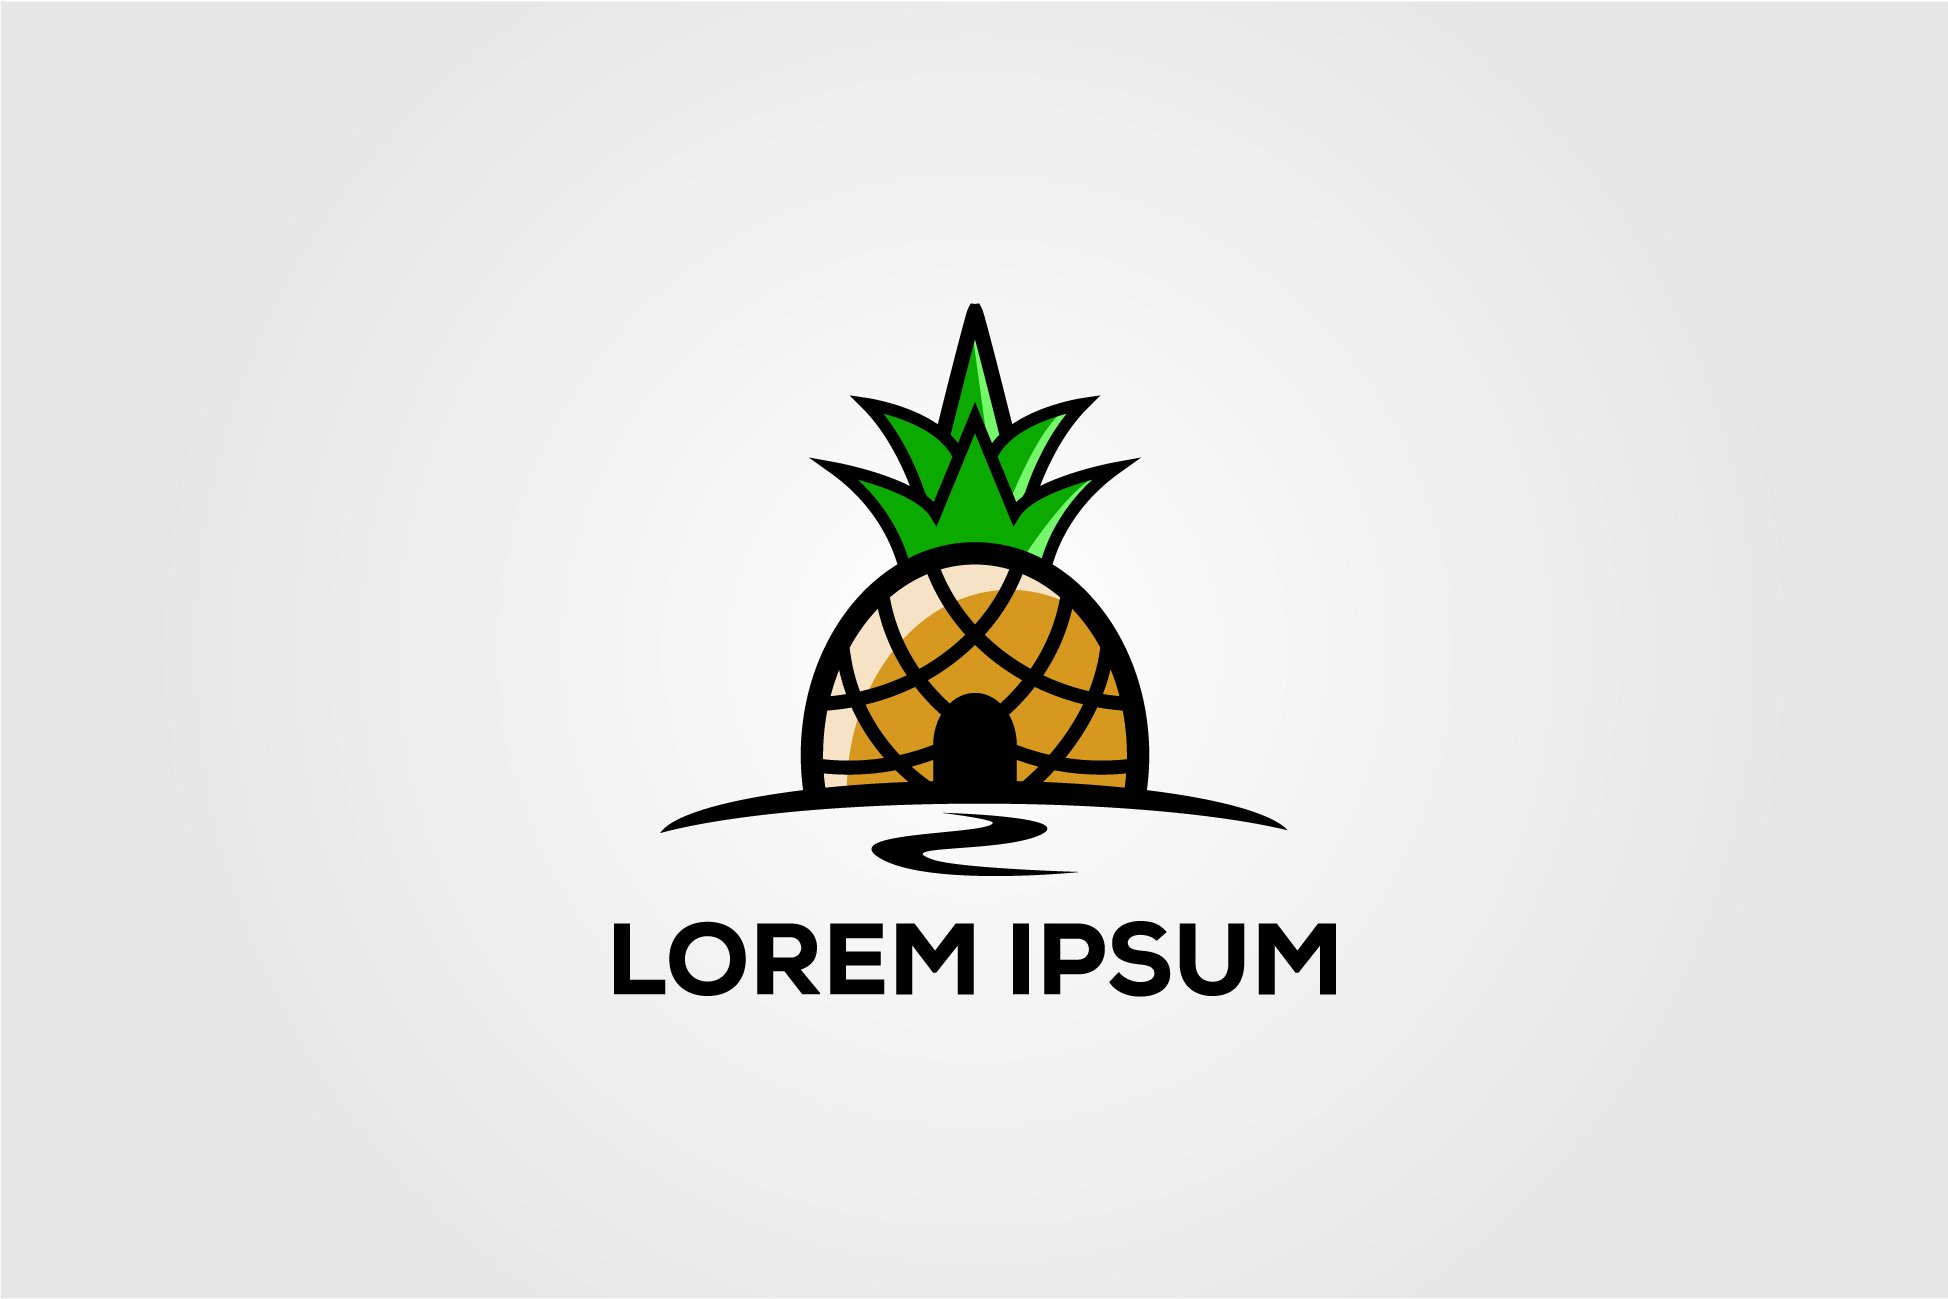 Creative Pineapple house Fruit Logo cover image.